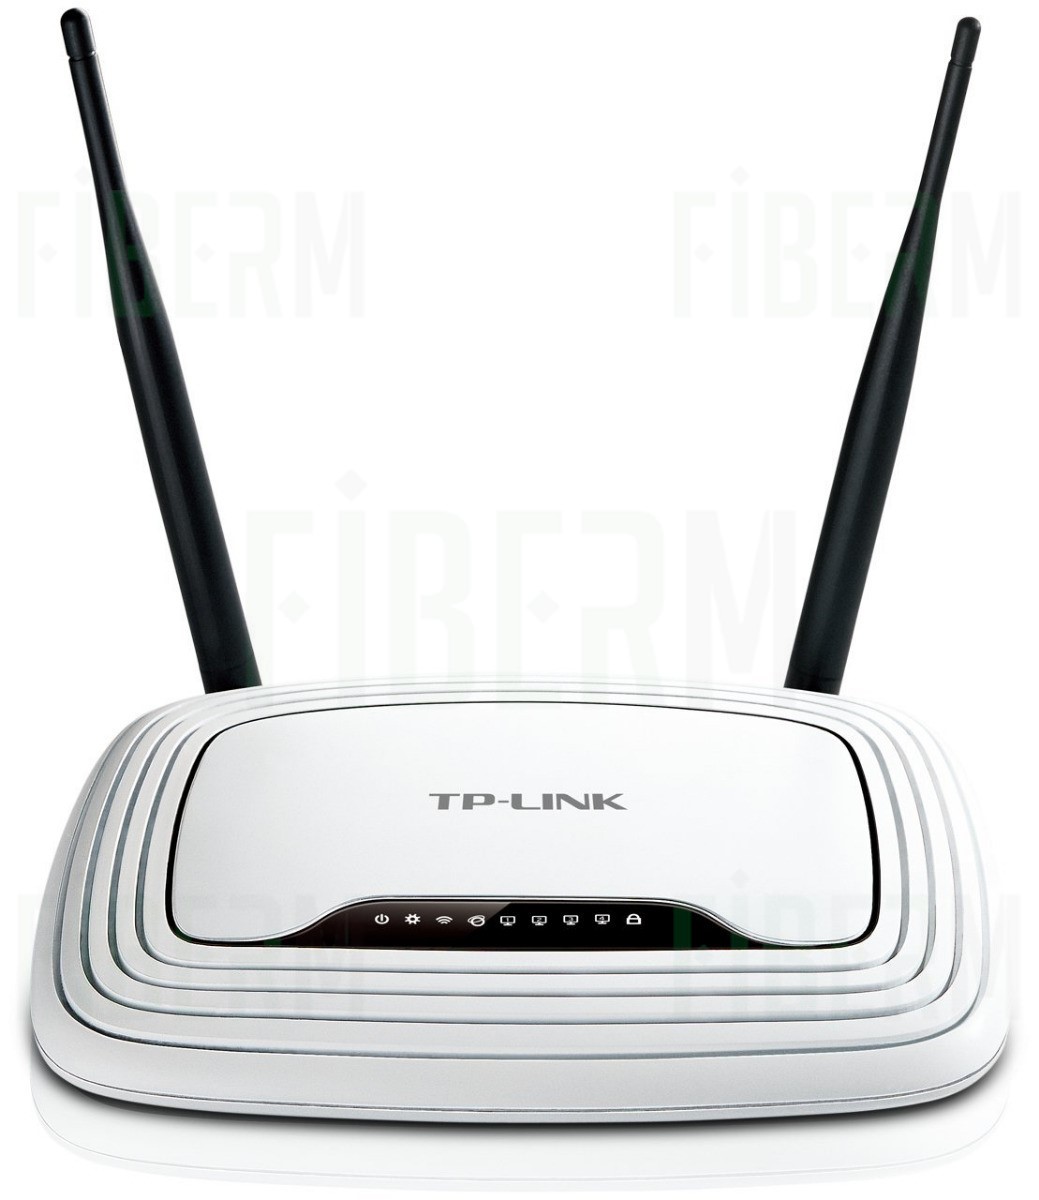 TP-LINK TL-WR841N WiFi Router N300 1 x WAN 4 x LAN